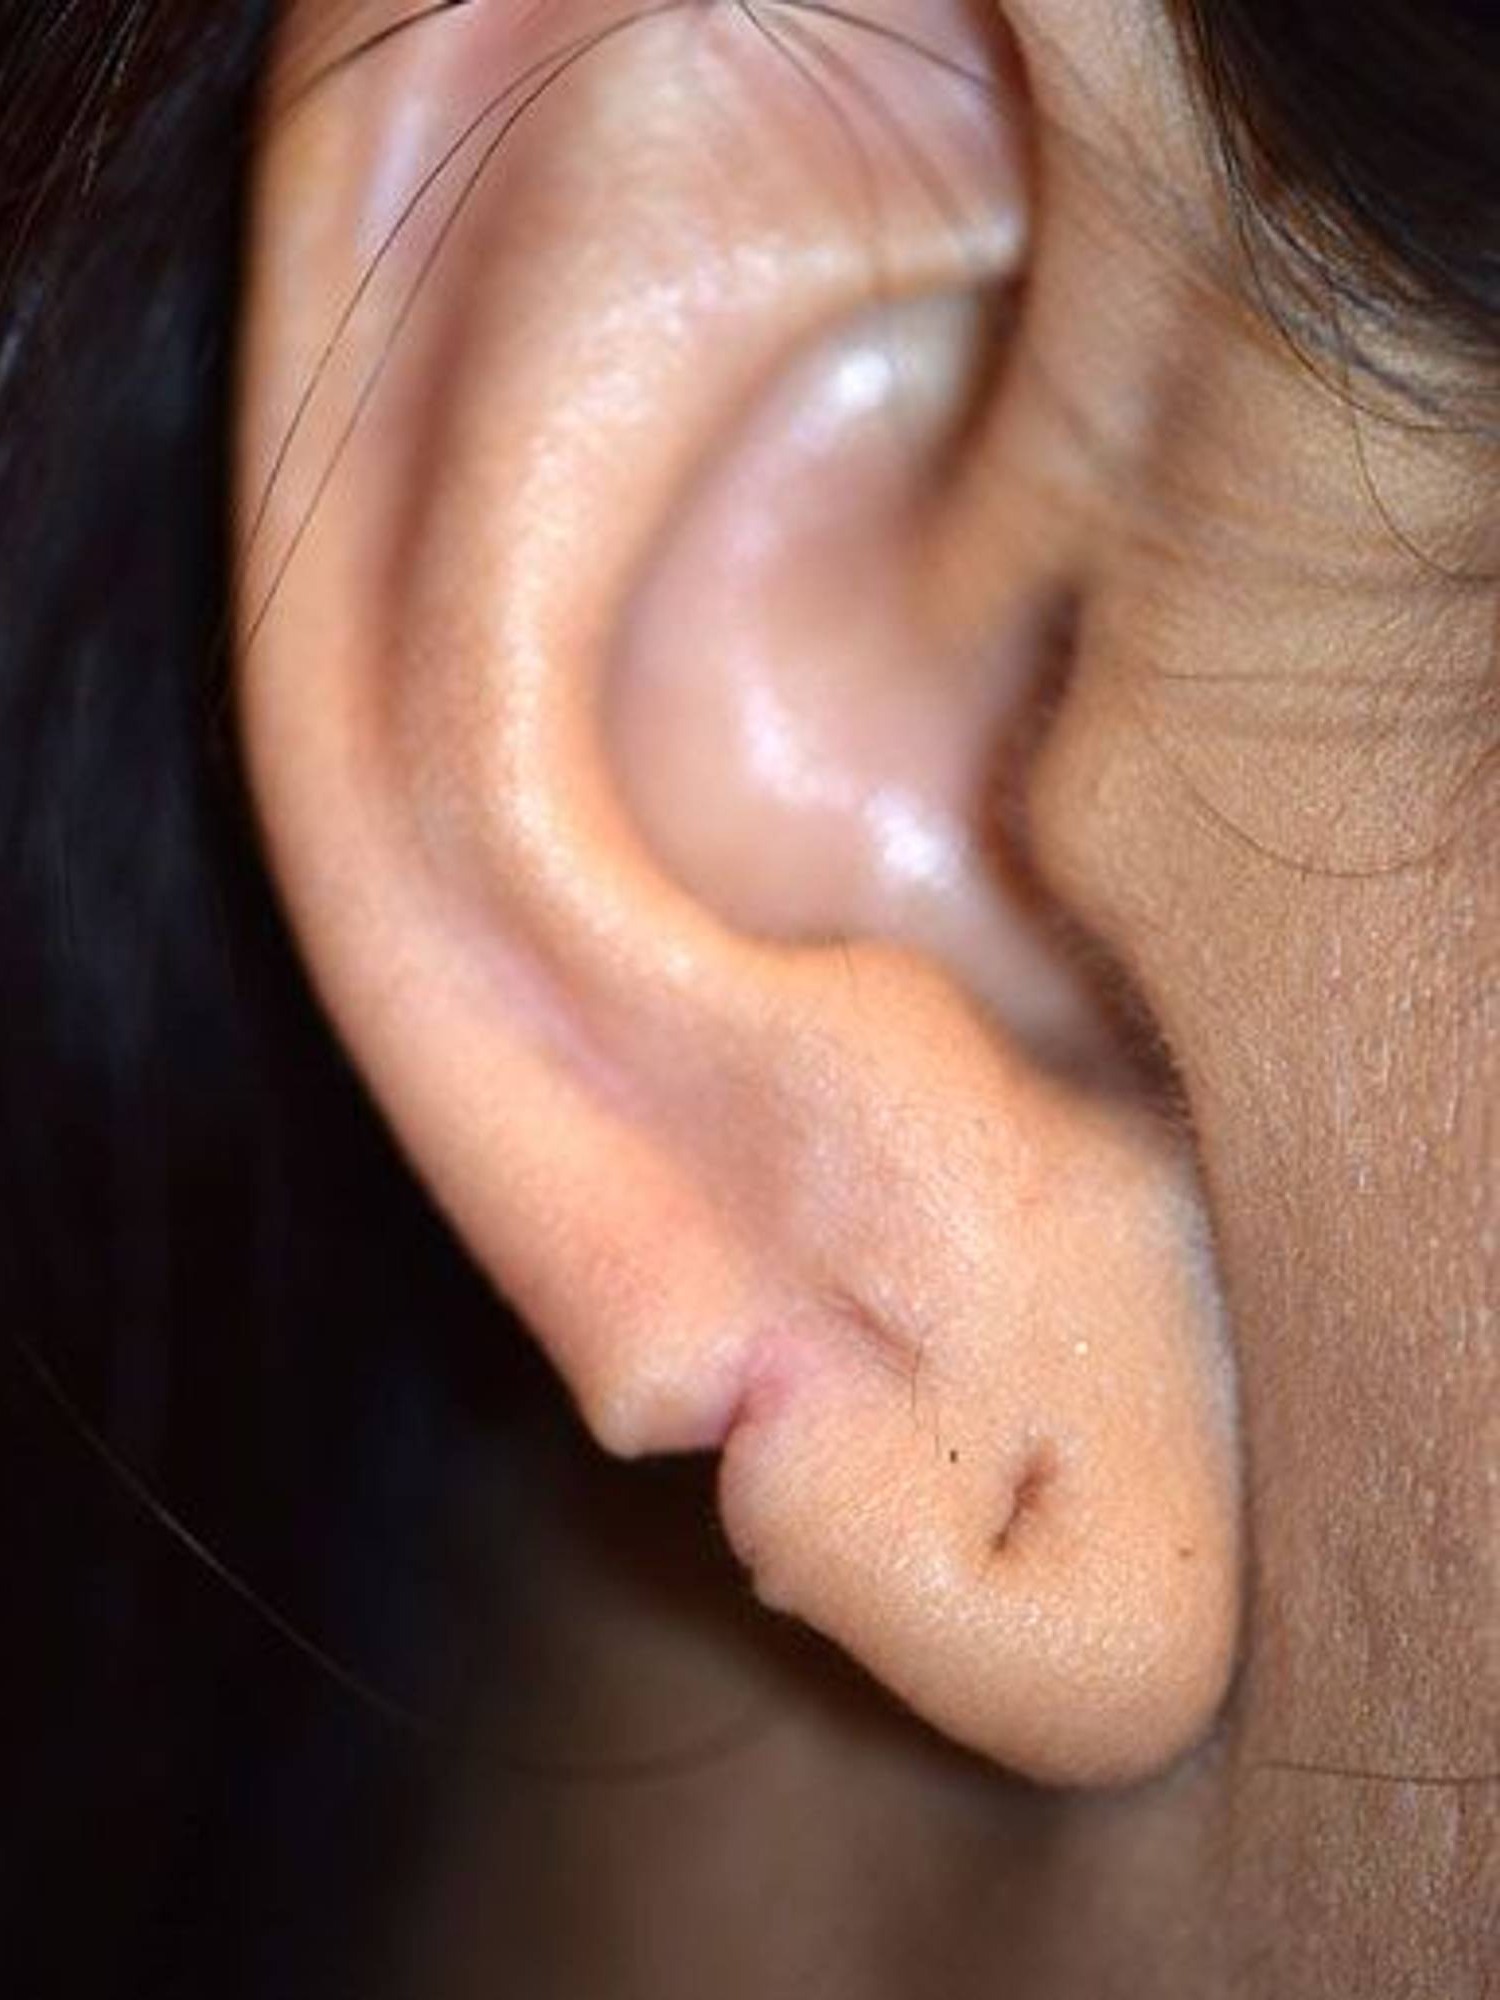 Ear Repair Torn Gauged Earlobe Houston TX